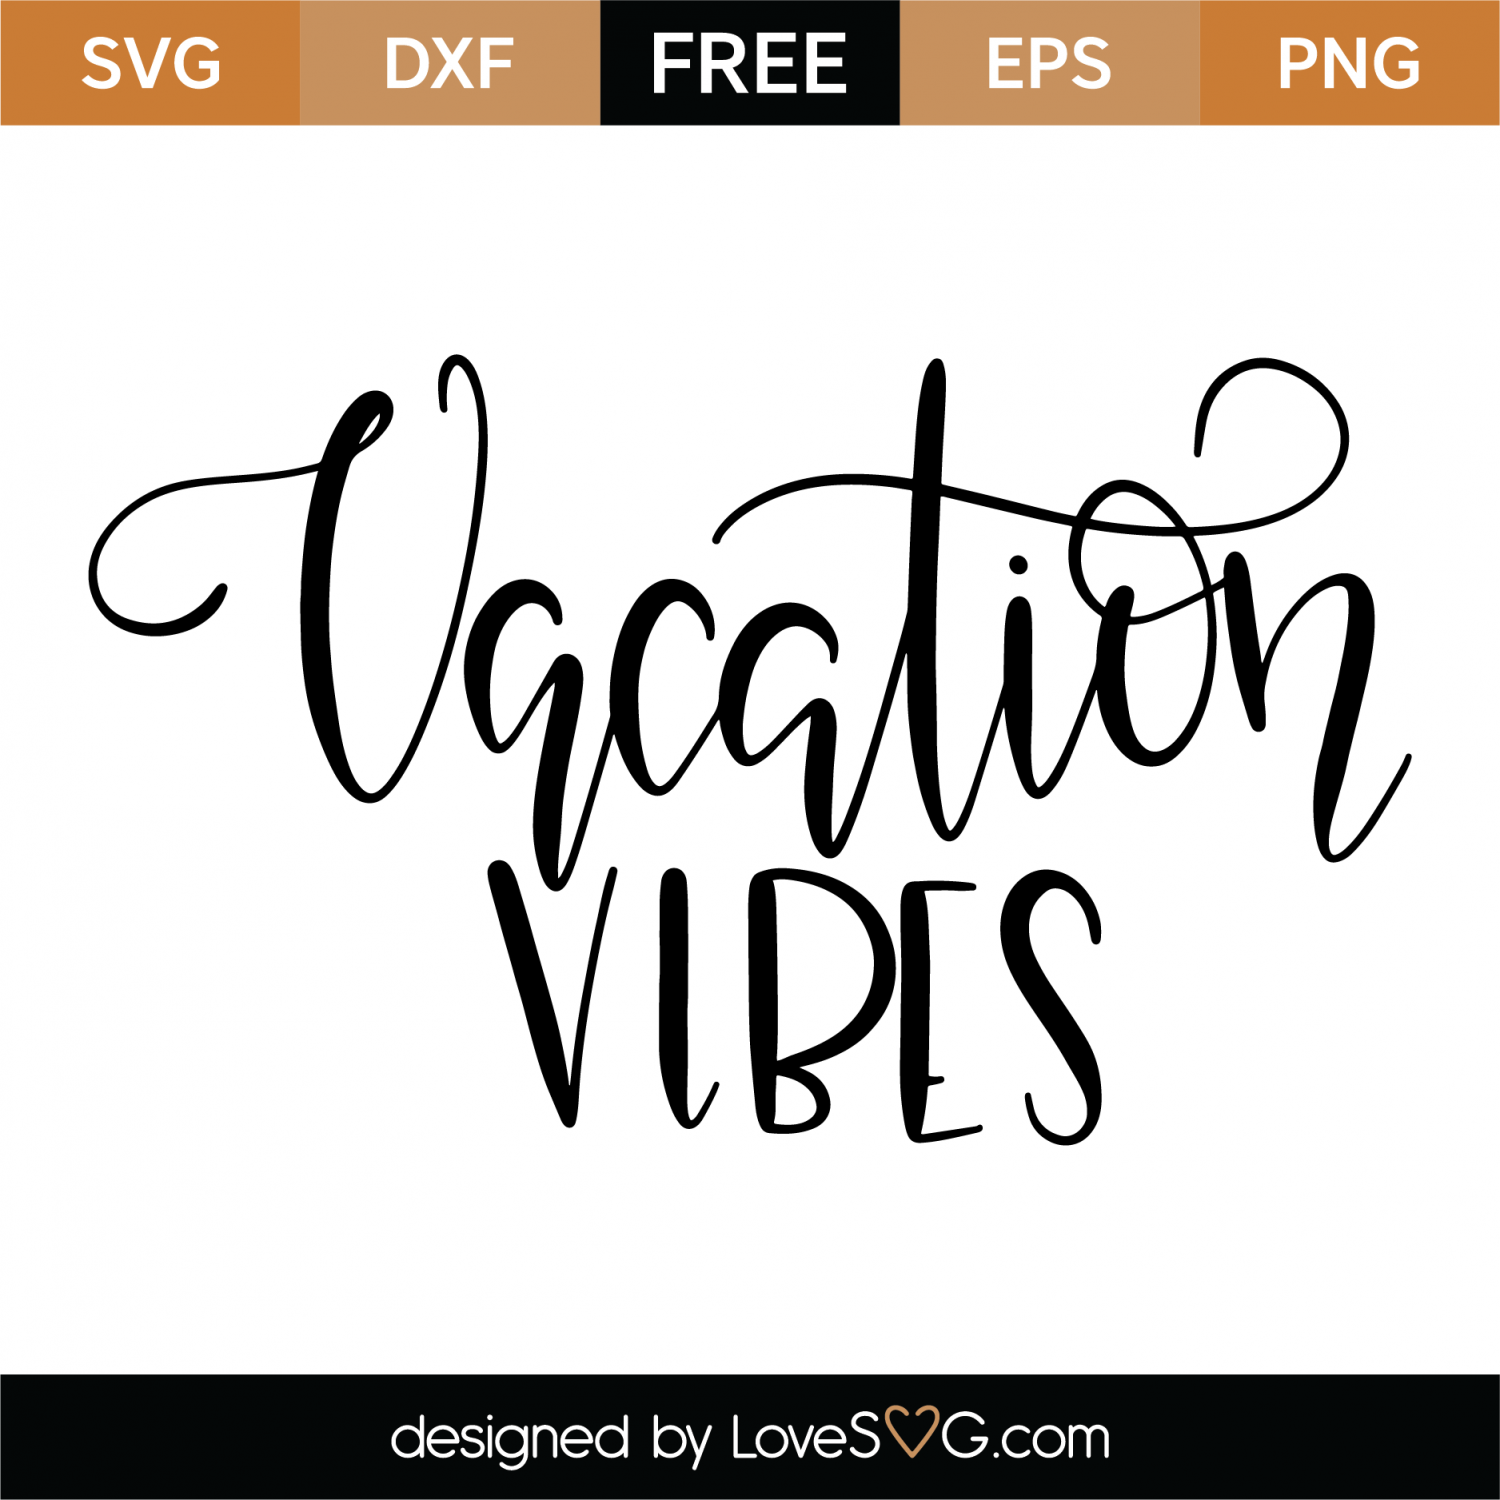 Free Vacation Vibes SVG Cut File | Lovesvg.com